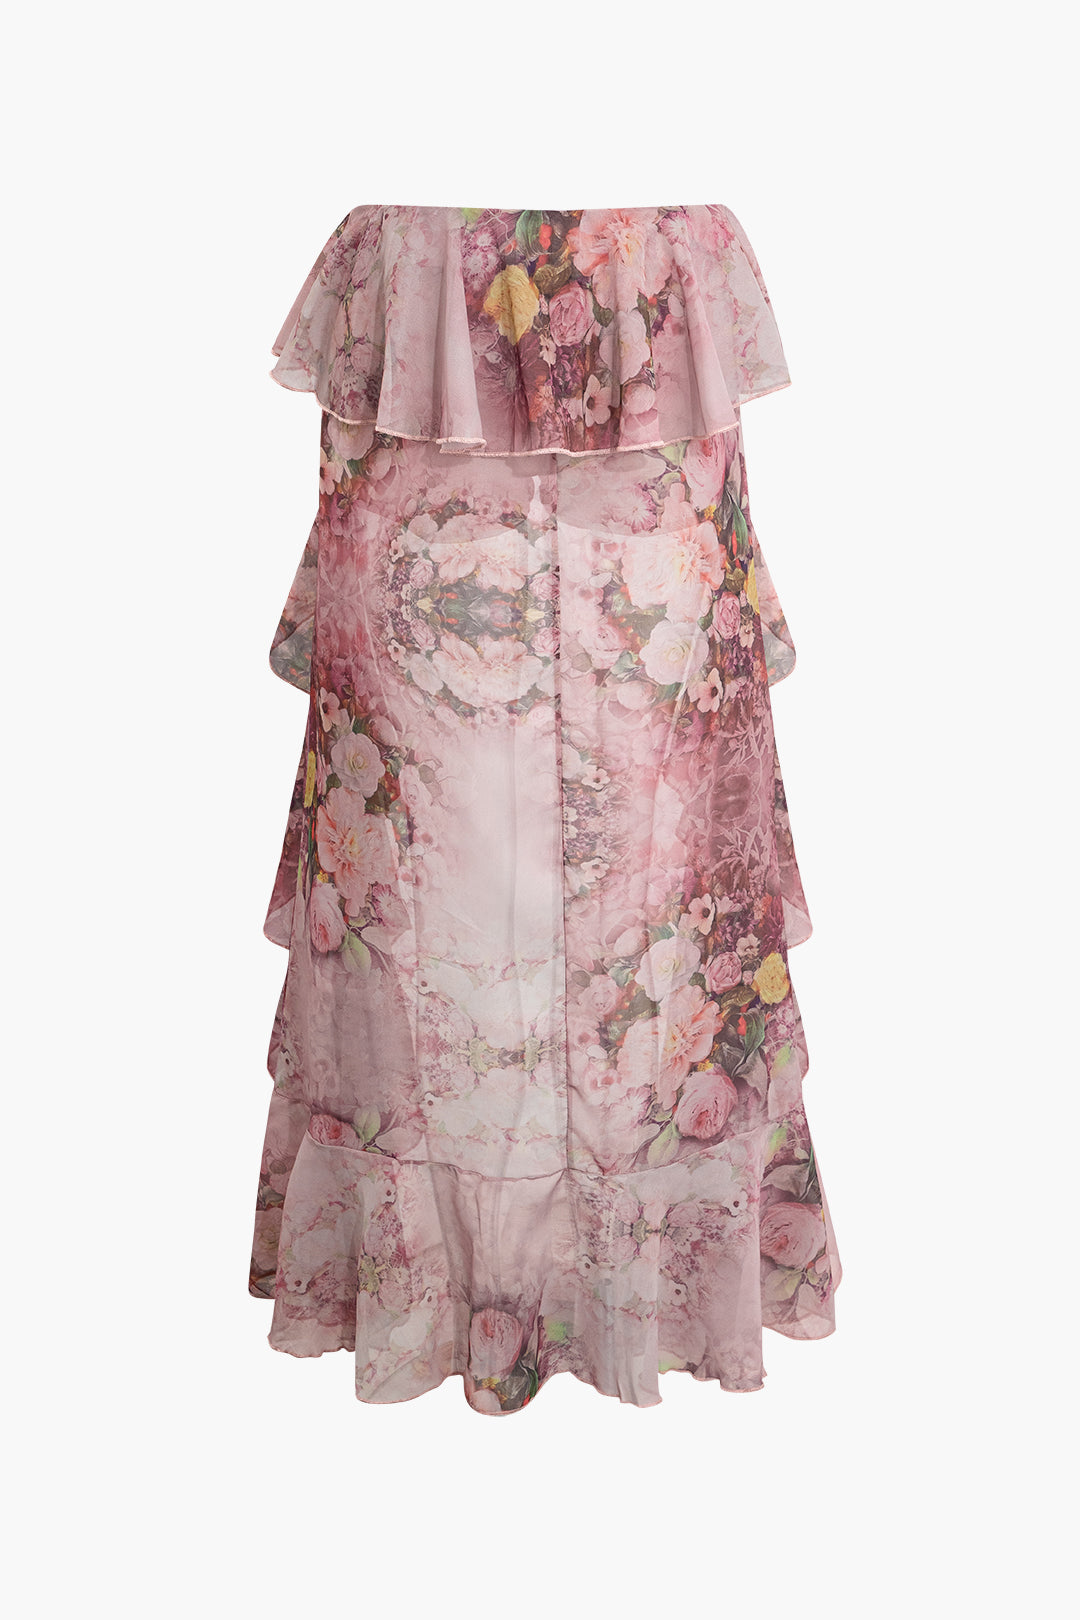 Floral Print Ruffle Layered Skirt